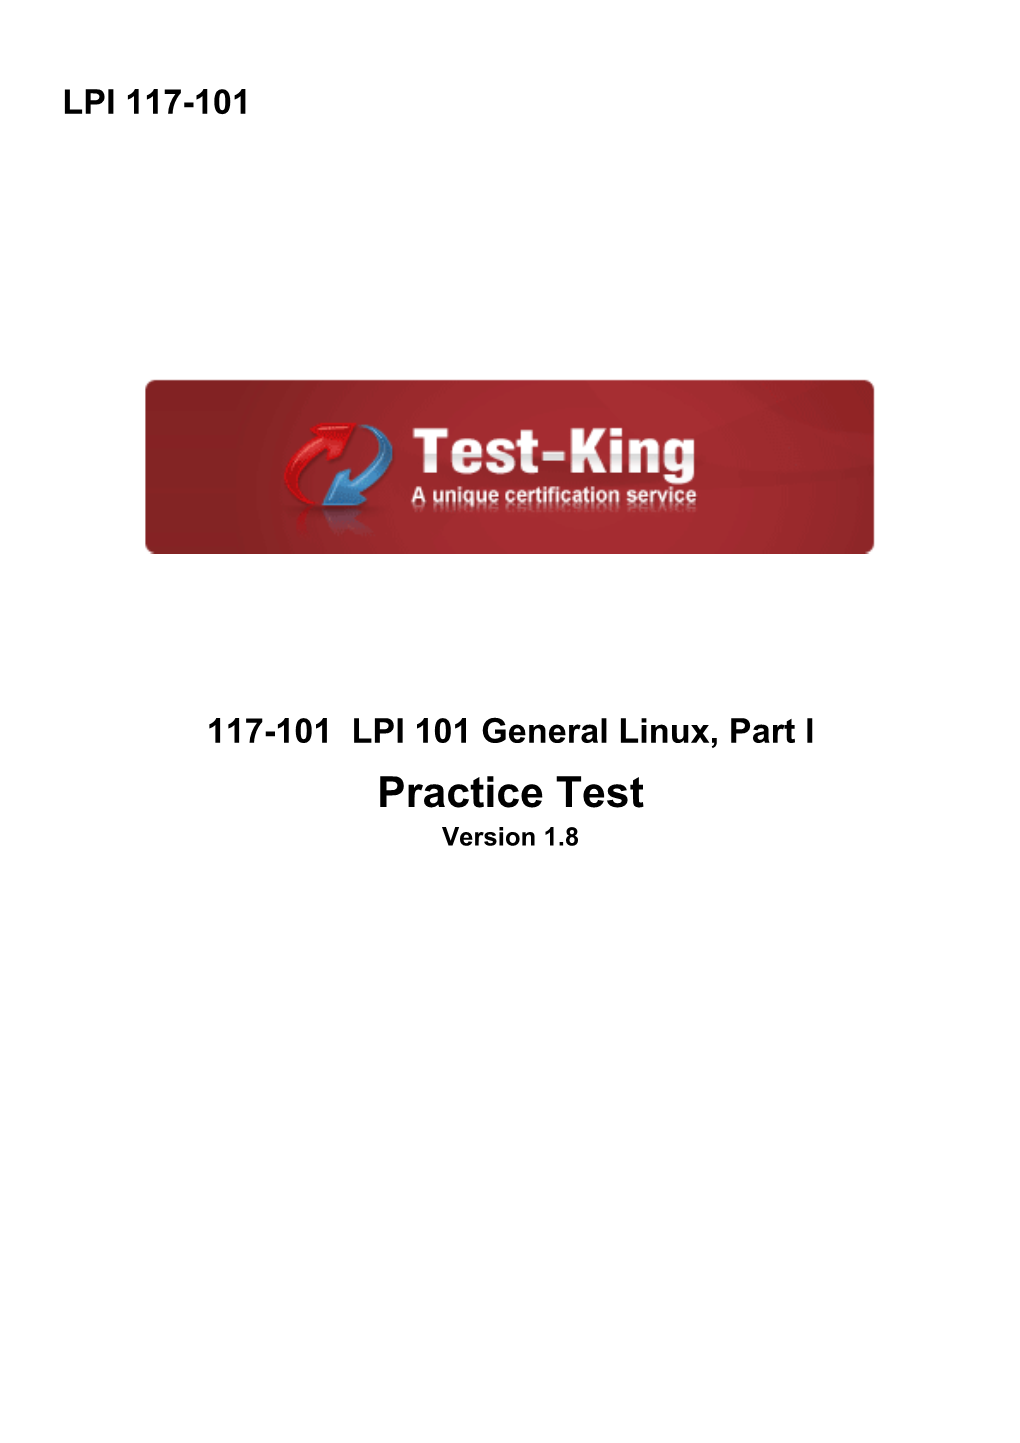 Practice Test Version 1.8 LPI 117-101: Practice Exam QUESTION NO: 1 CORRECT TEXT